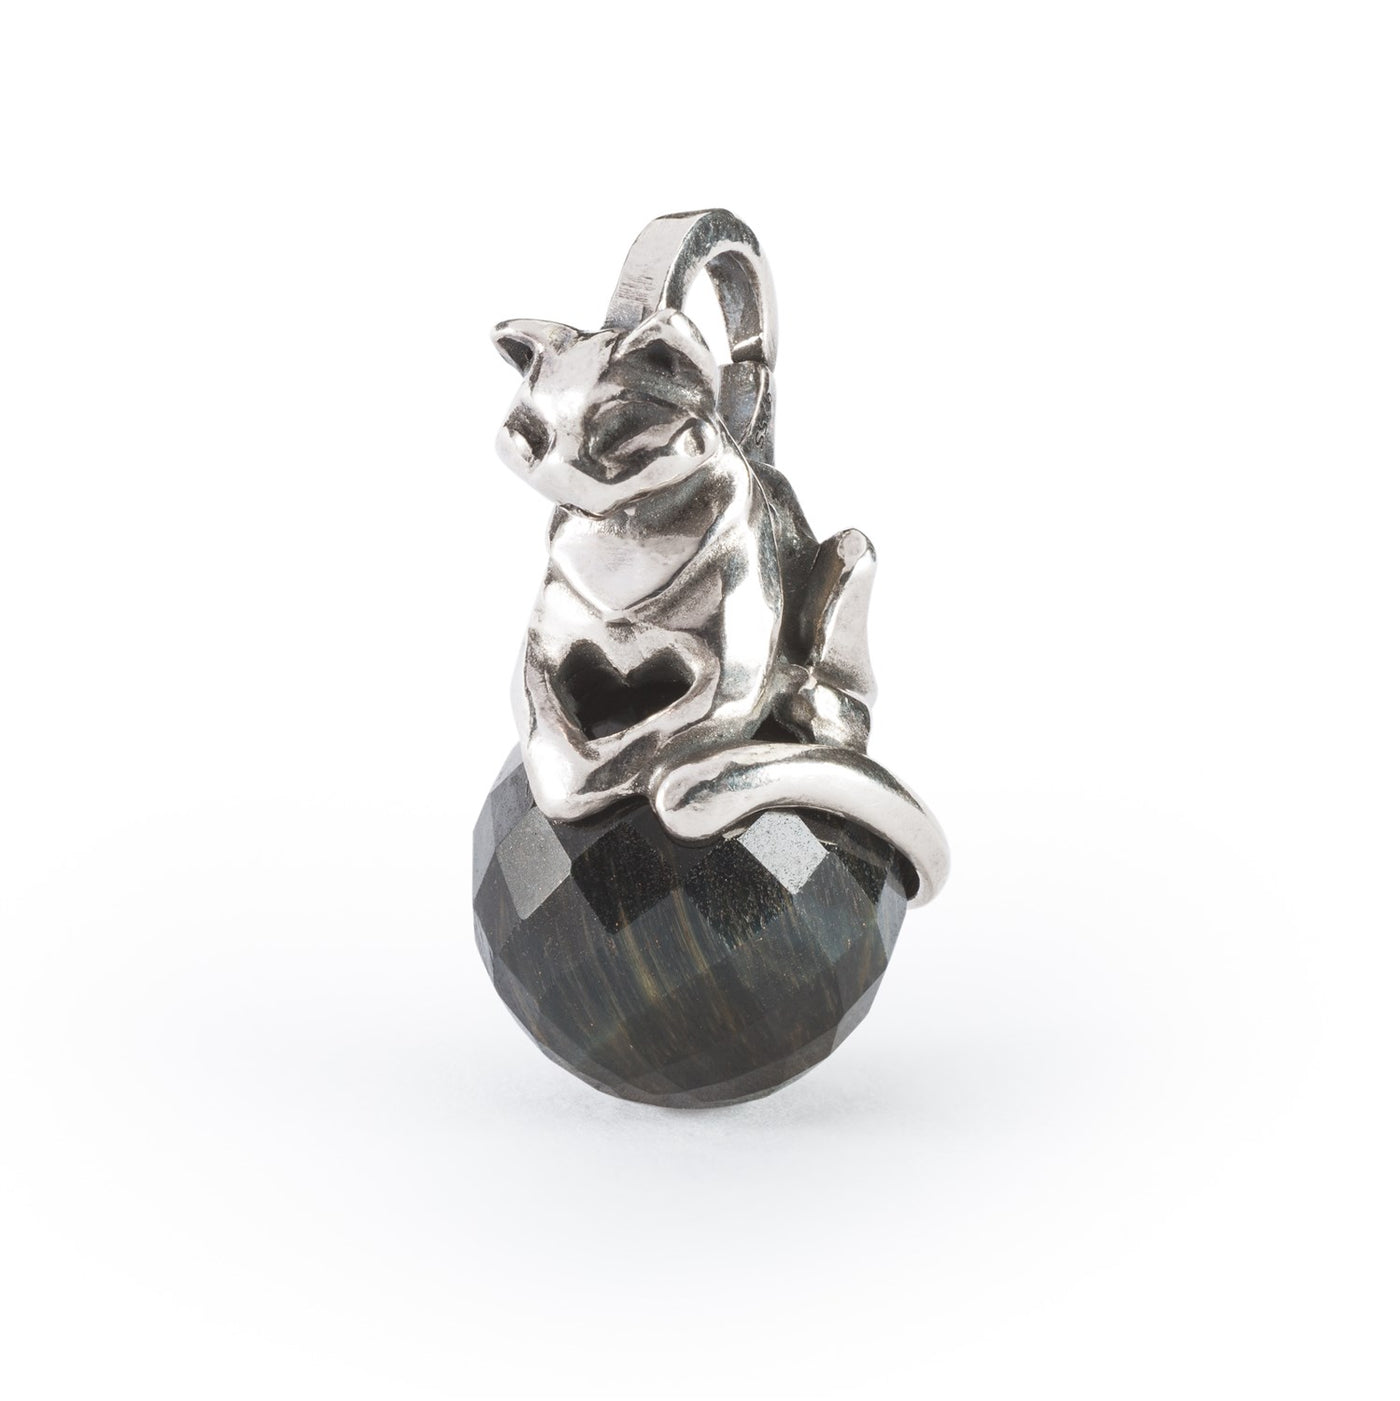 Jewellery silver cat pendant sitting on a ball of Blue Tiger Eye gemstone.